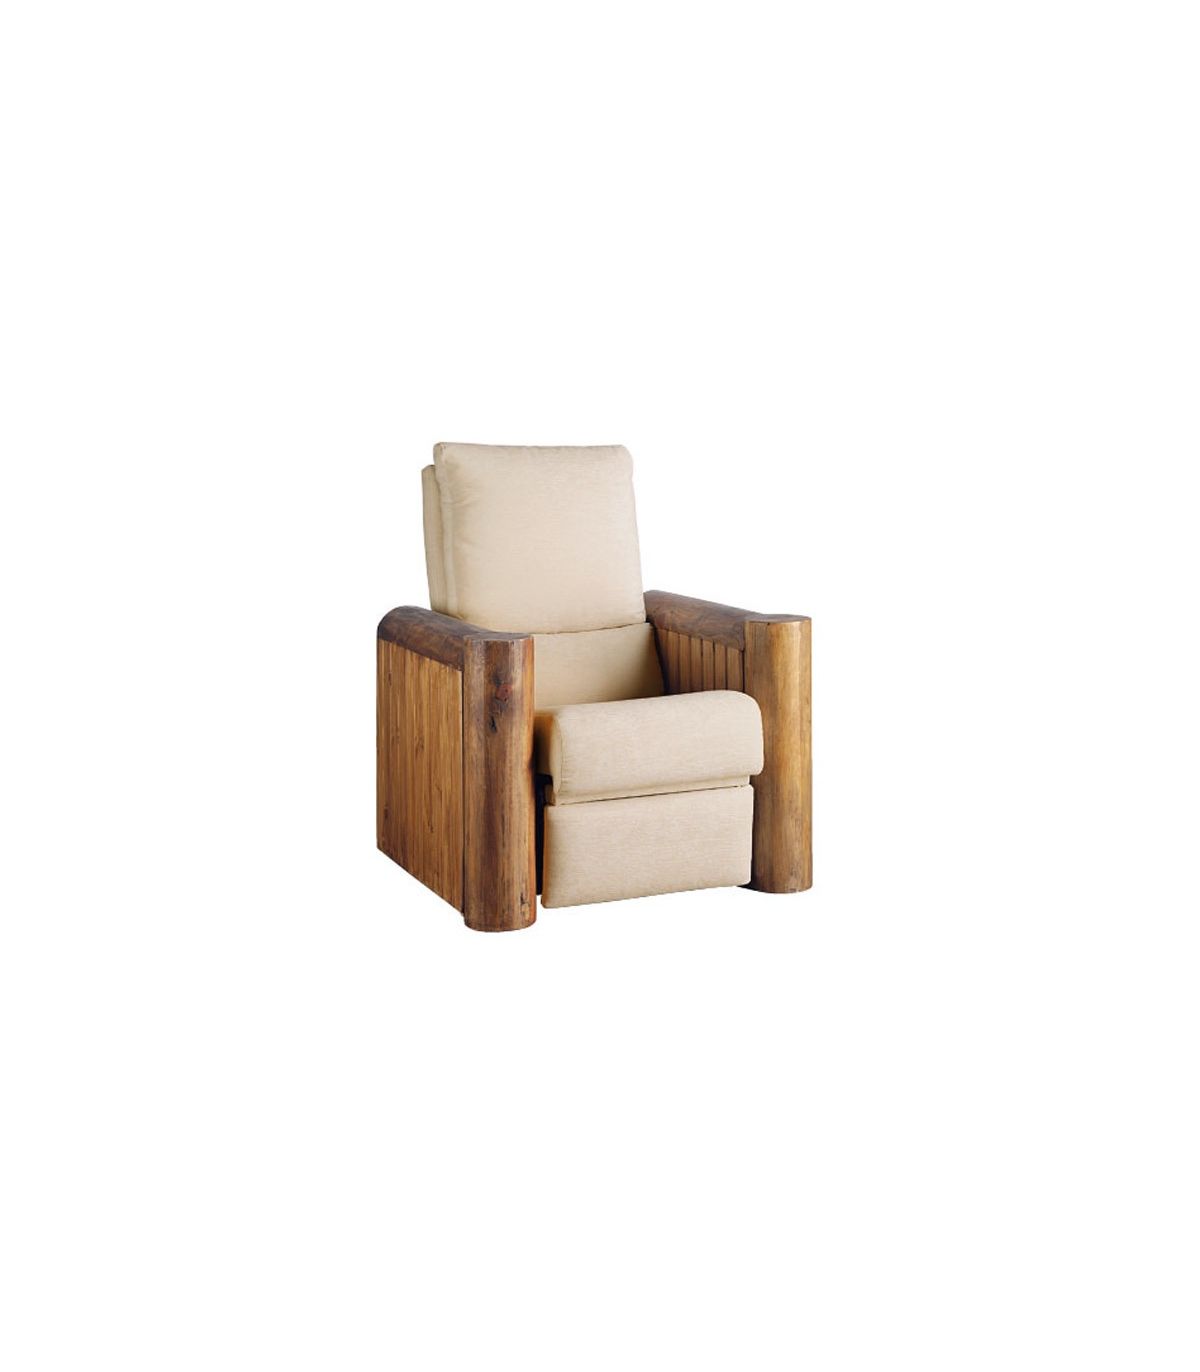 Sillón rústico de madera maciza de 1 plaza - Blog Myoc: Muebles rústicos de  madera maciza